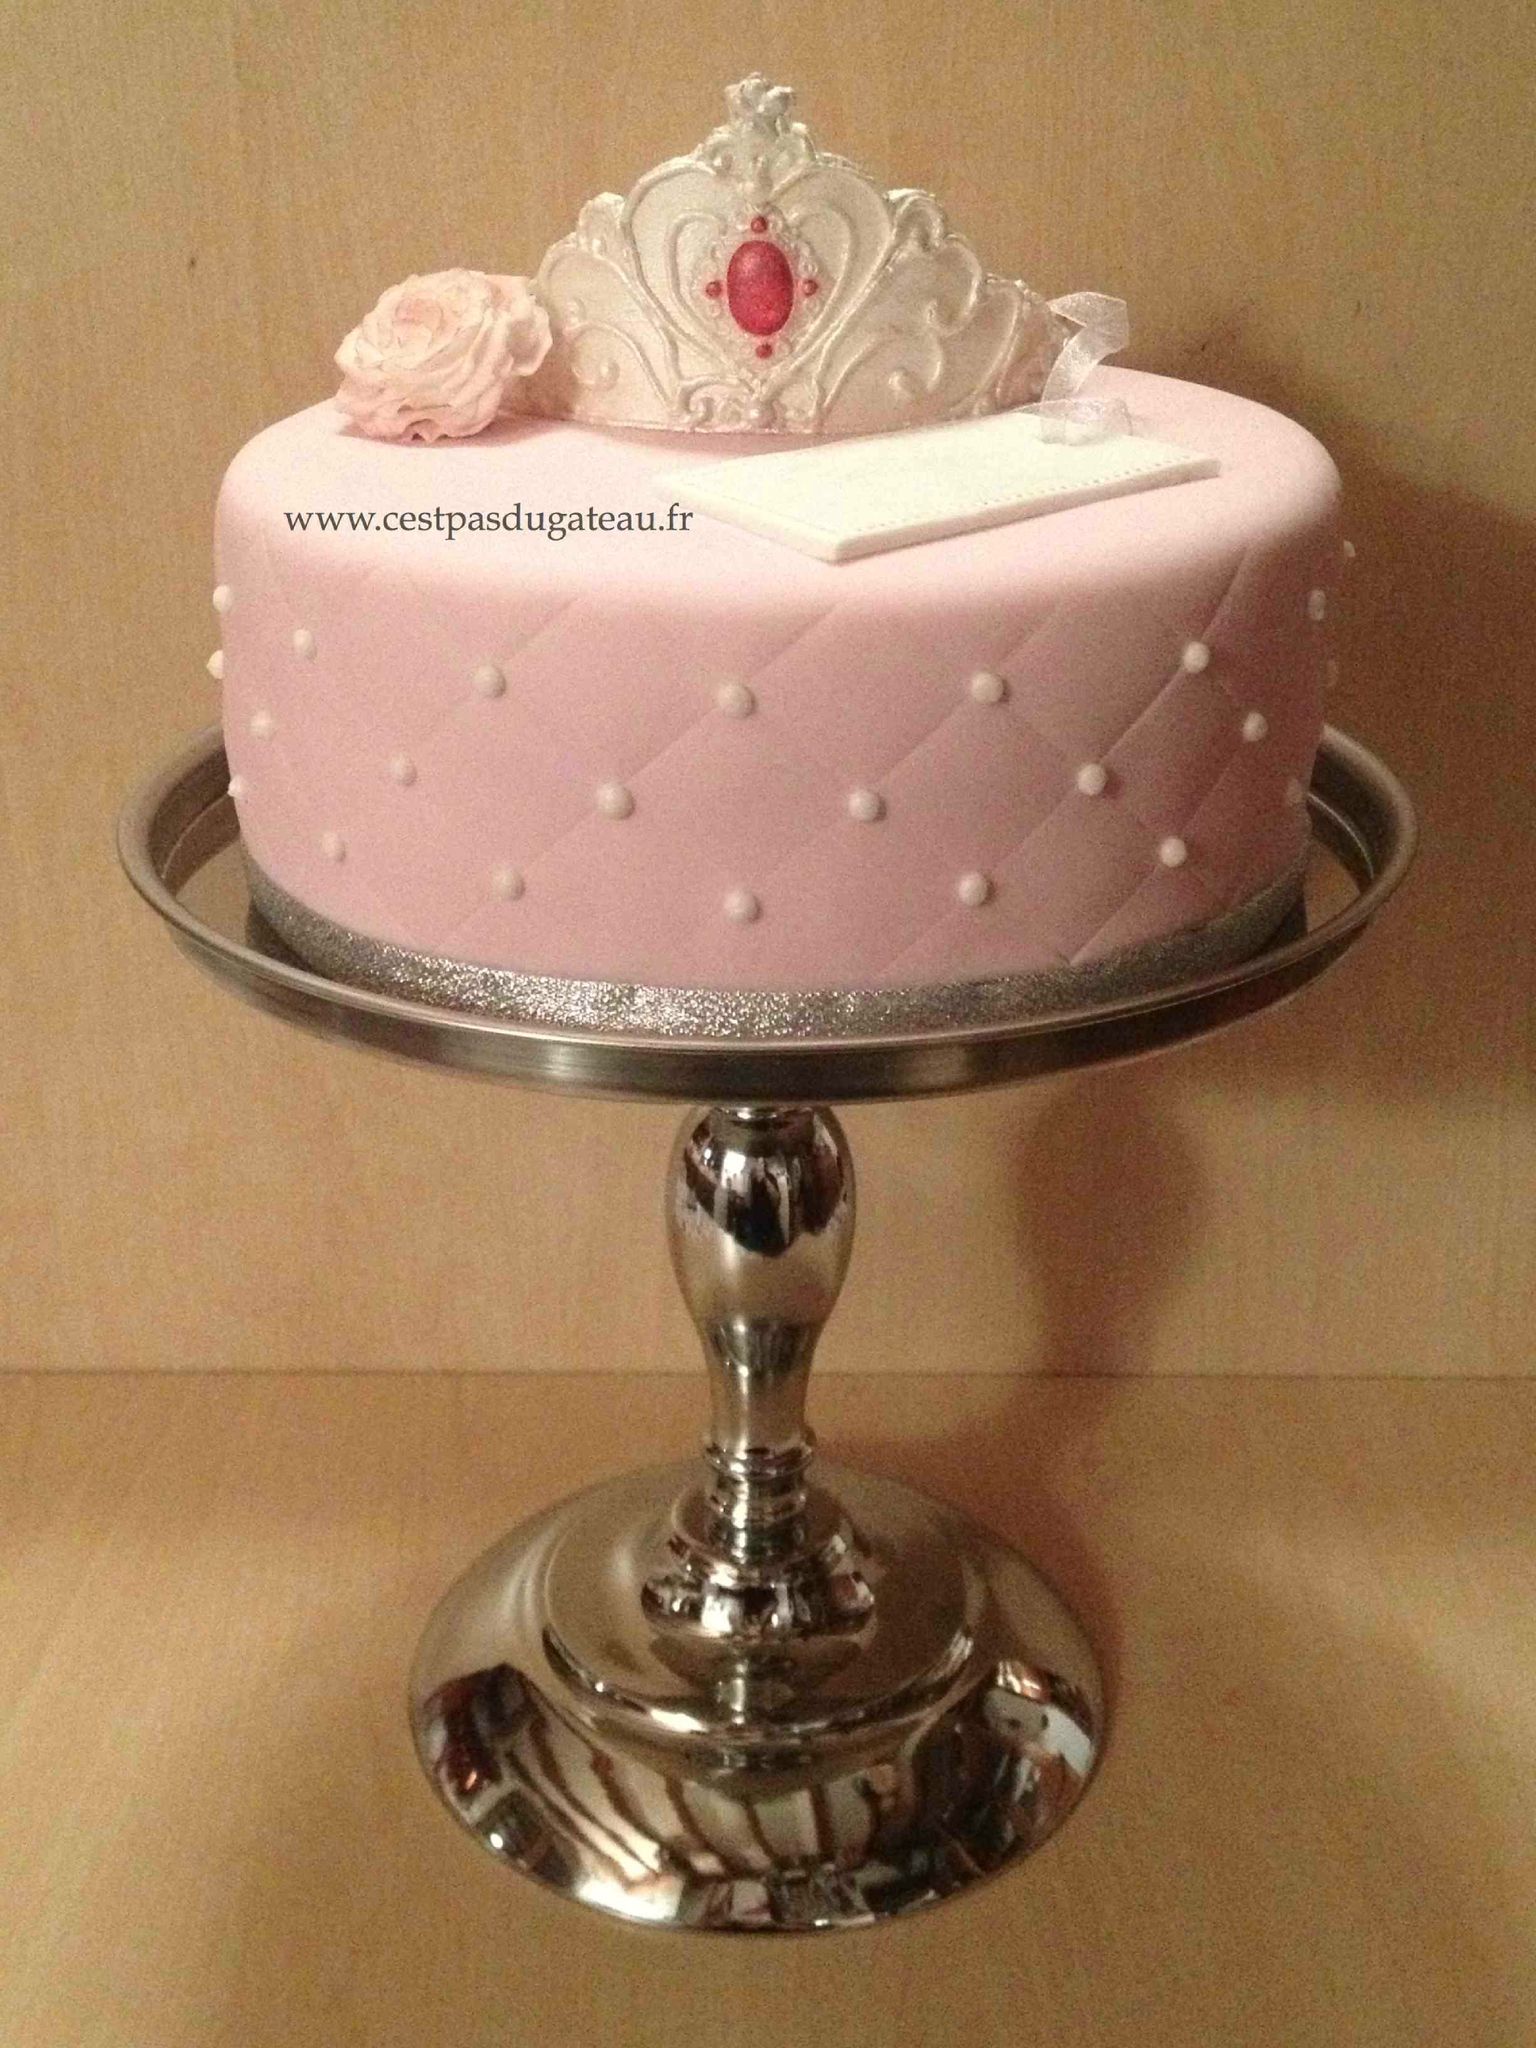 Gâteau baptême garçon:) (Blog Zôdio)